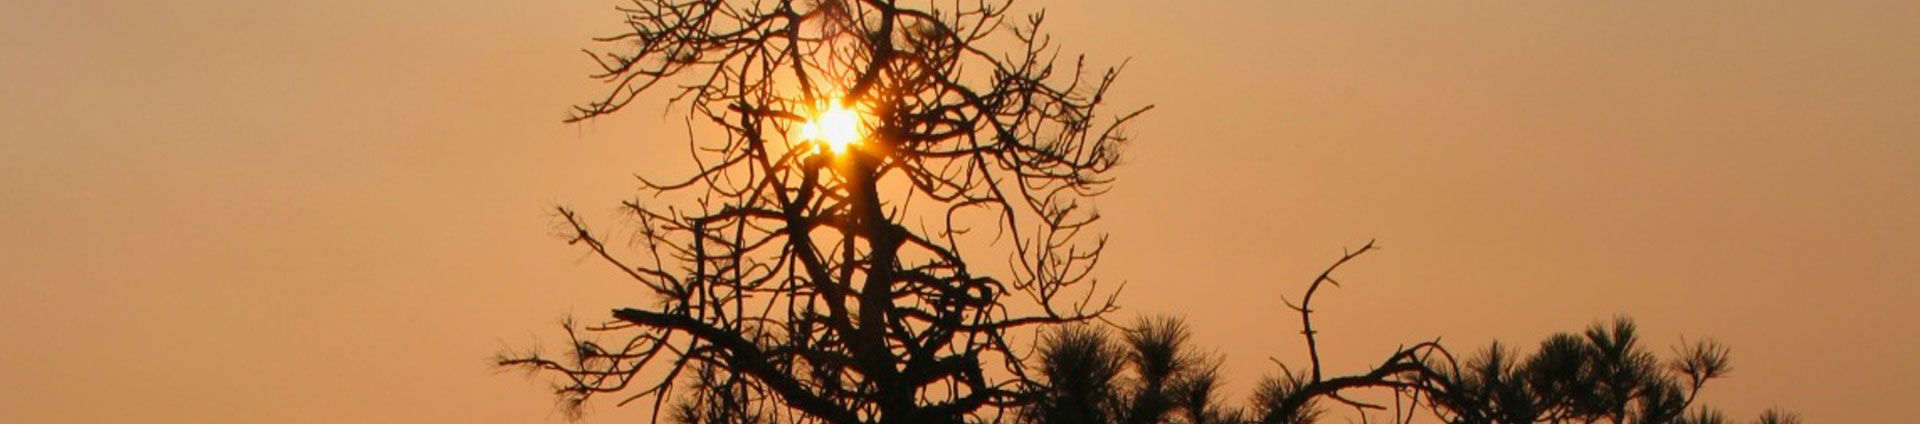 header image of sun shining through tree in smoke